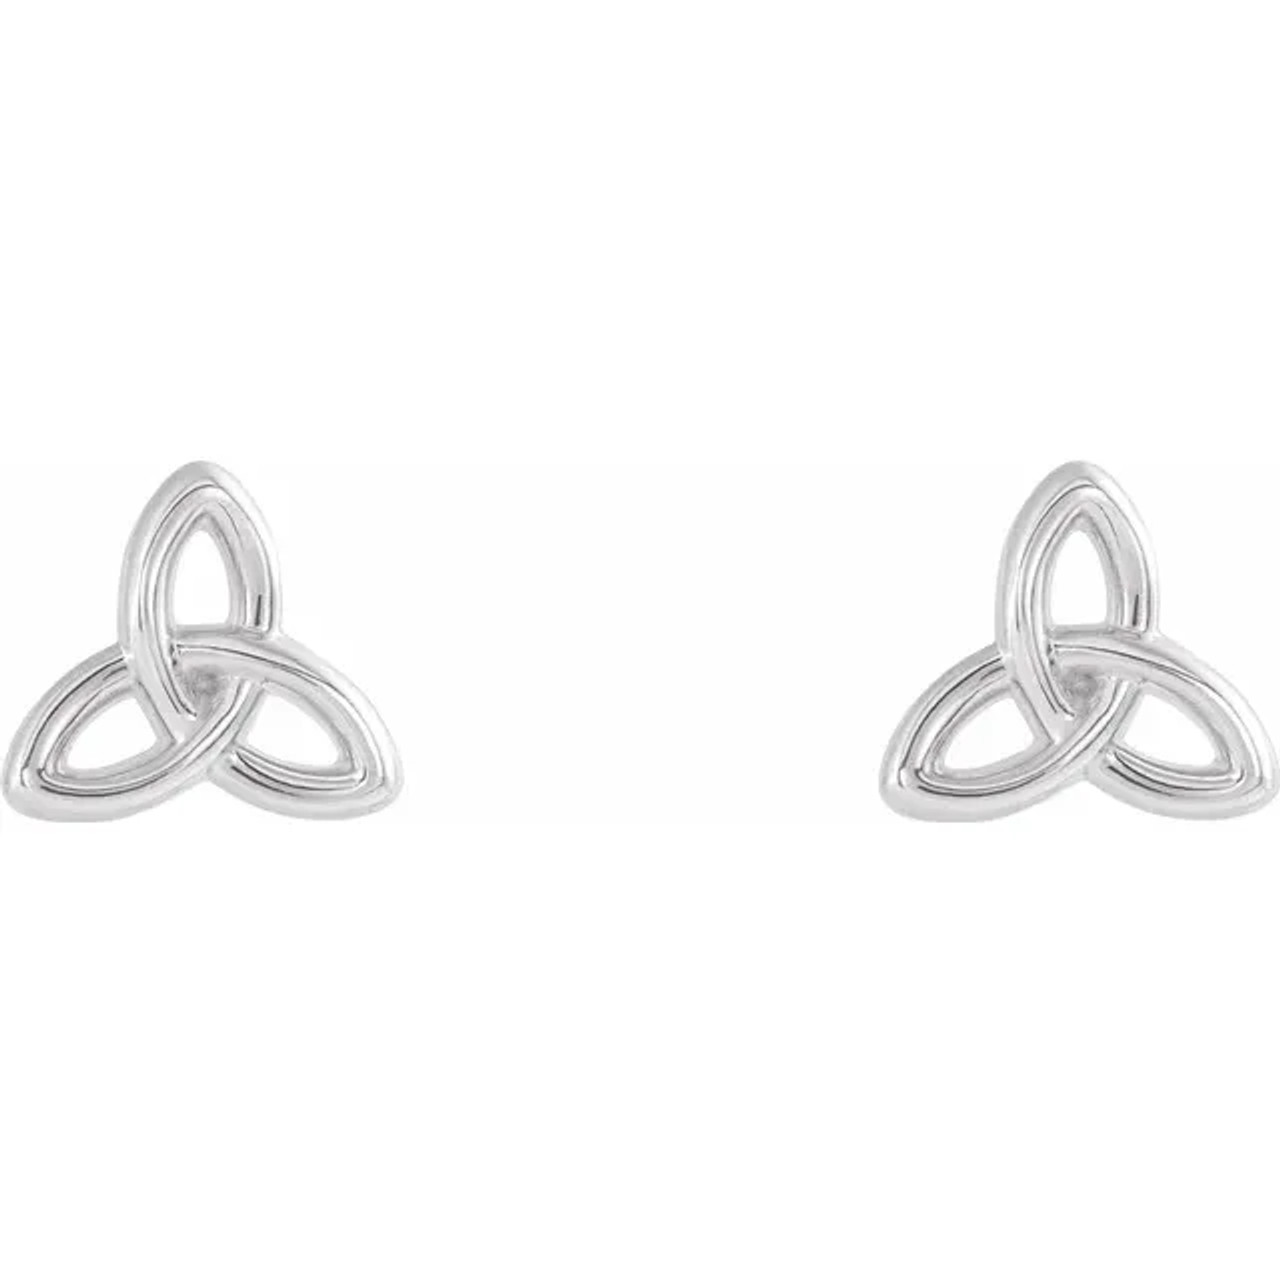 14K Gold Diamond Set Trinity Knot Stud Earrings